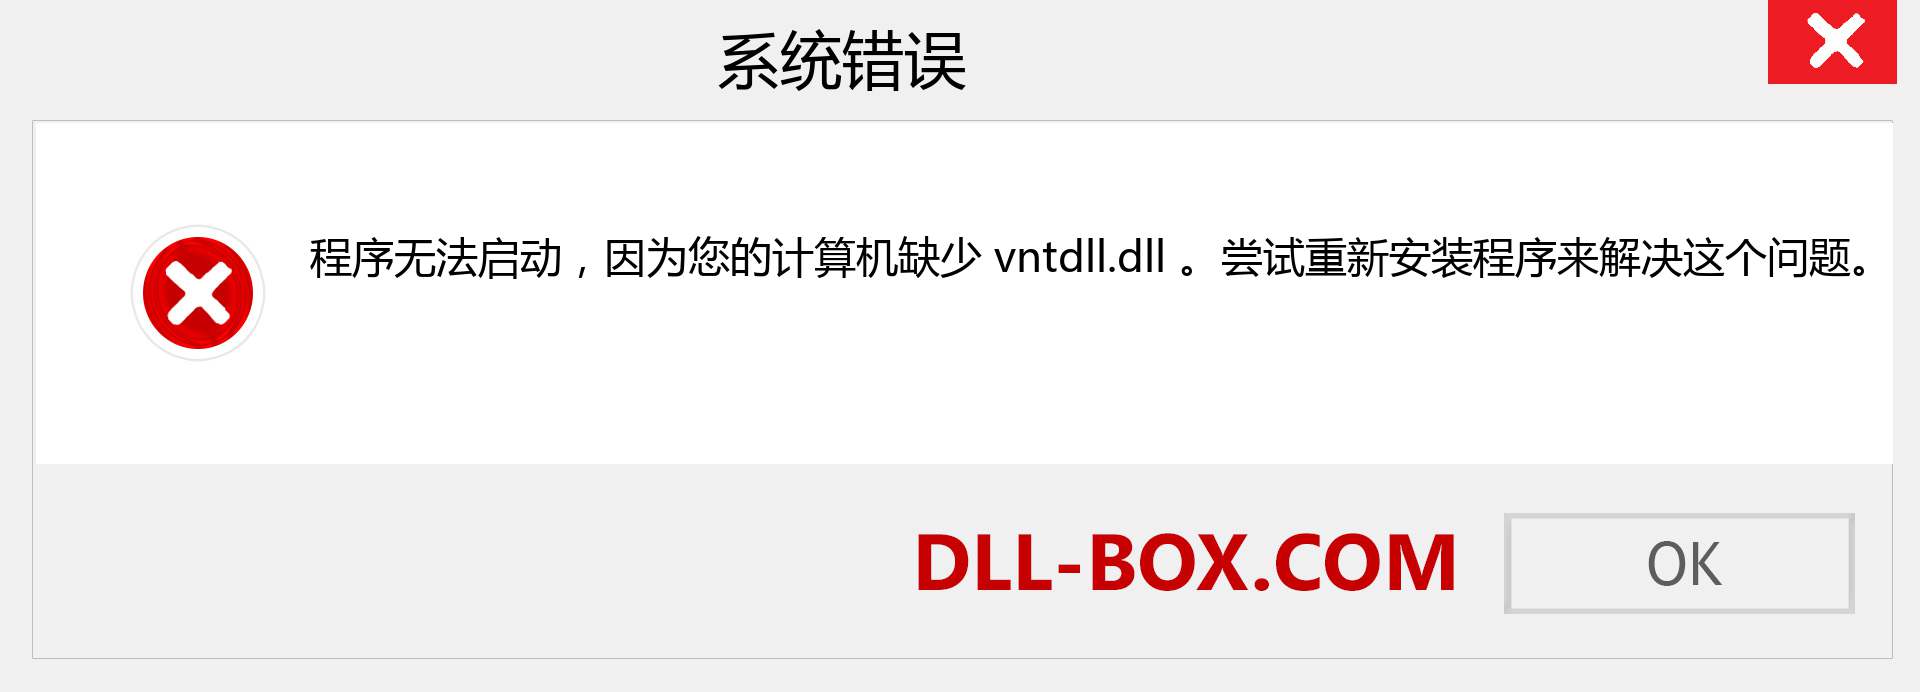 vntdll.dll 文件丢失？。 适用于 Windows 7、8、10 的下载 - 修复 Windows、照片、图像上的 vntdll dll 丢失错误